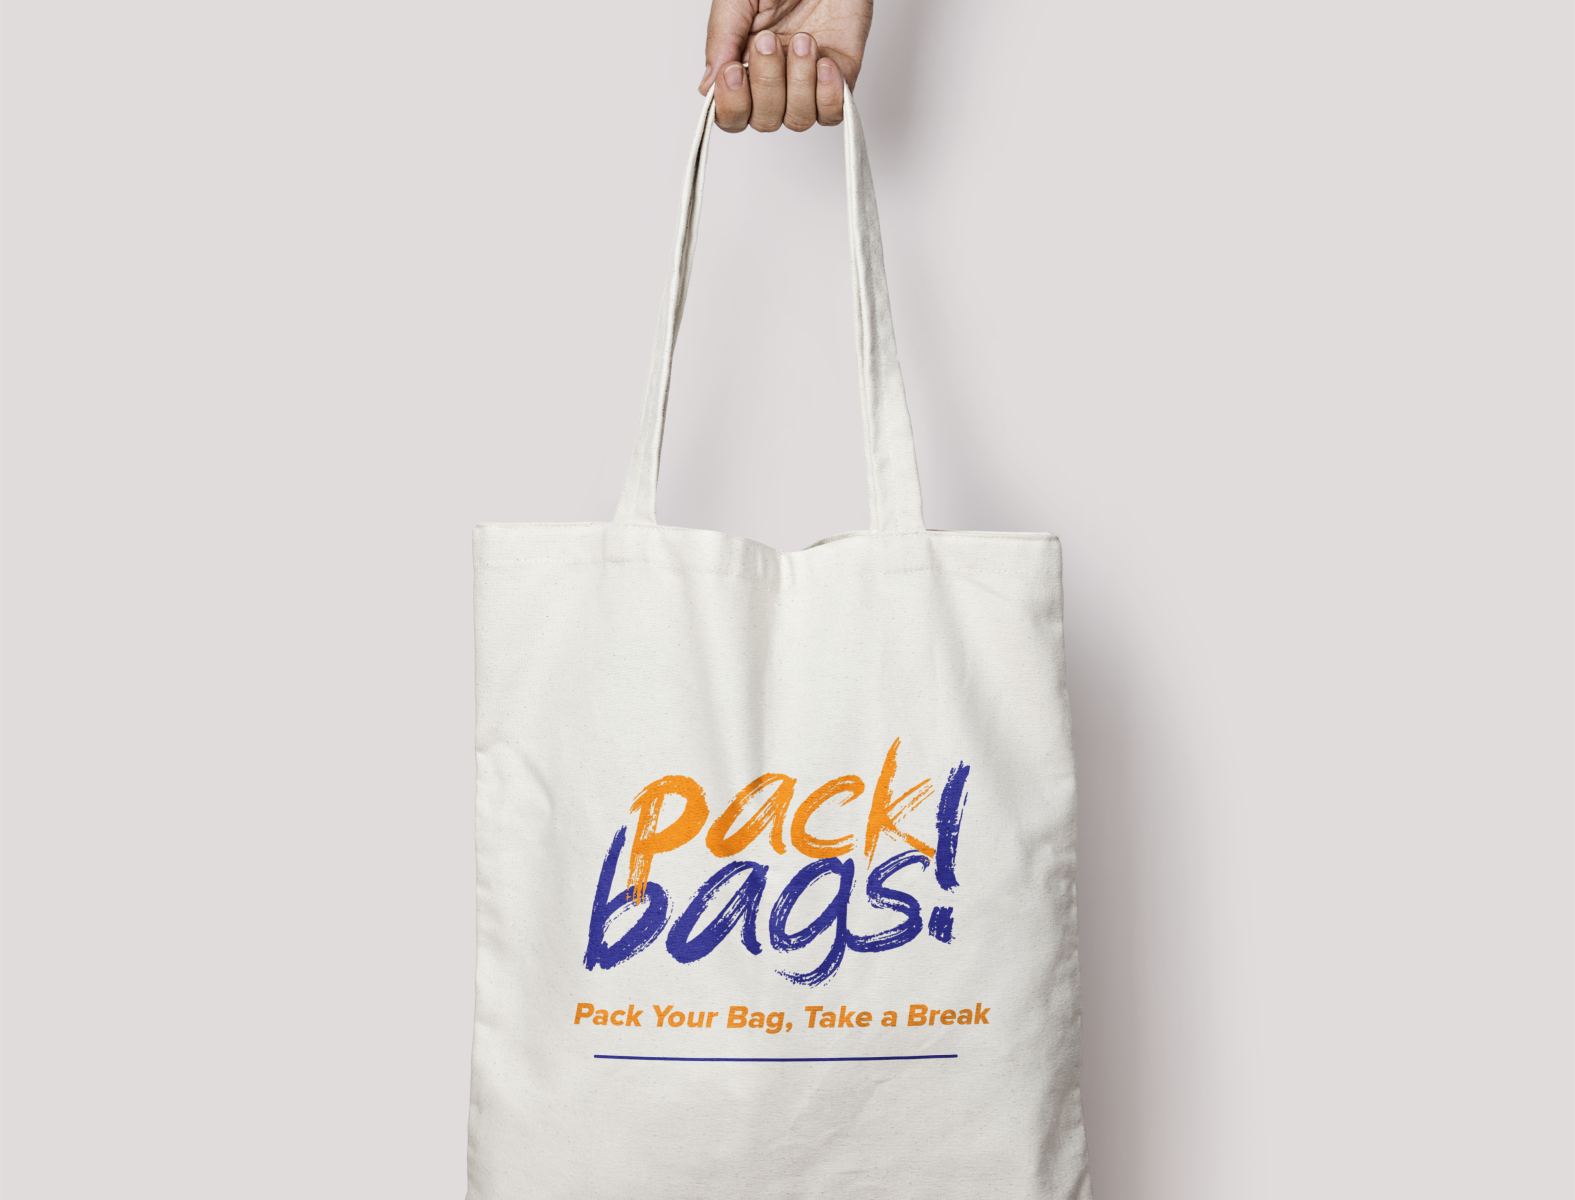 Totebag Souvenir - PackBags! Indonesia by Wahyu Anggar on Dribbble